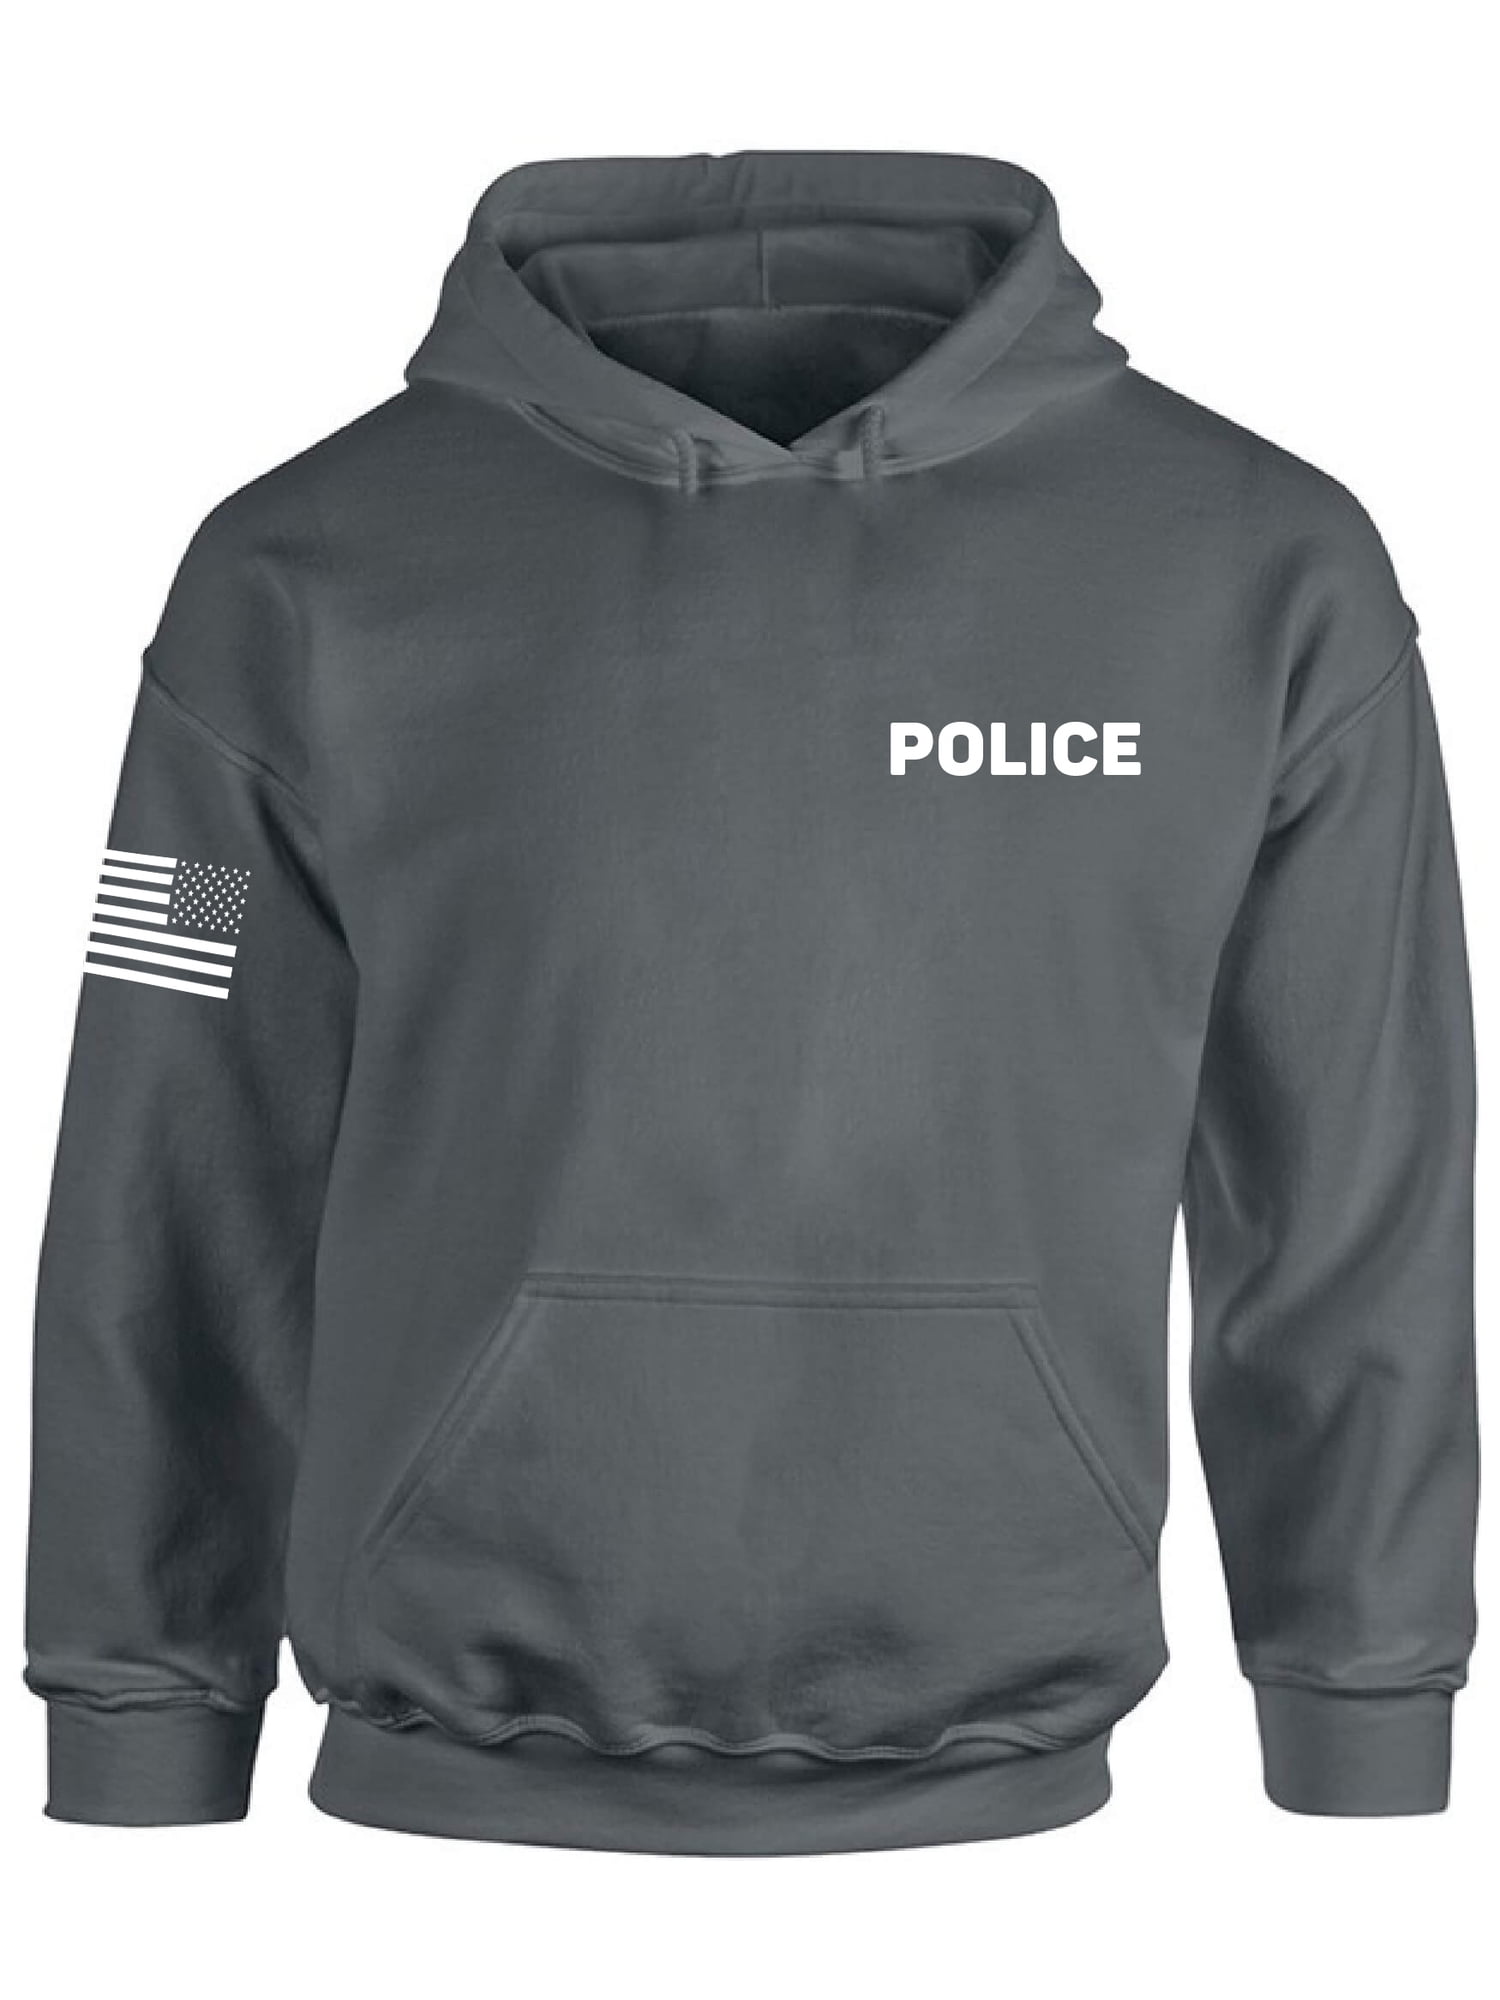 Deputy Sheriff-Police Law Enforcement Sweatshirts Gildan